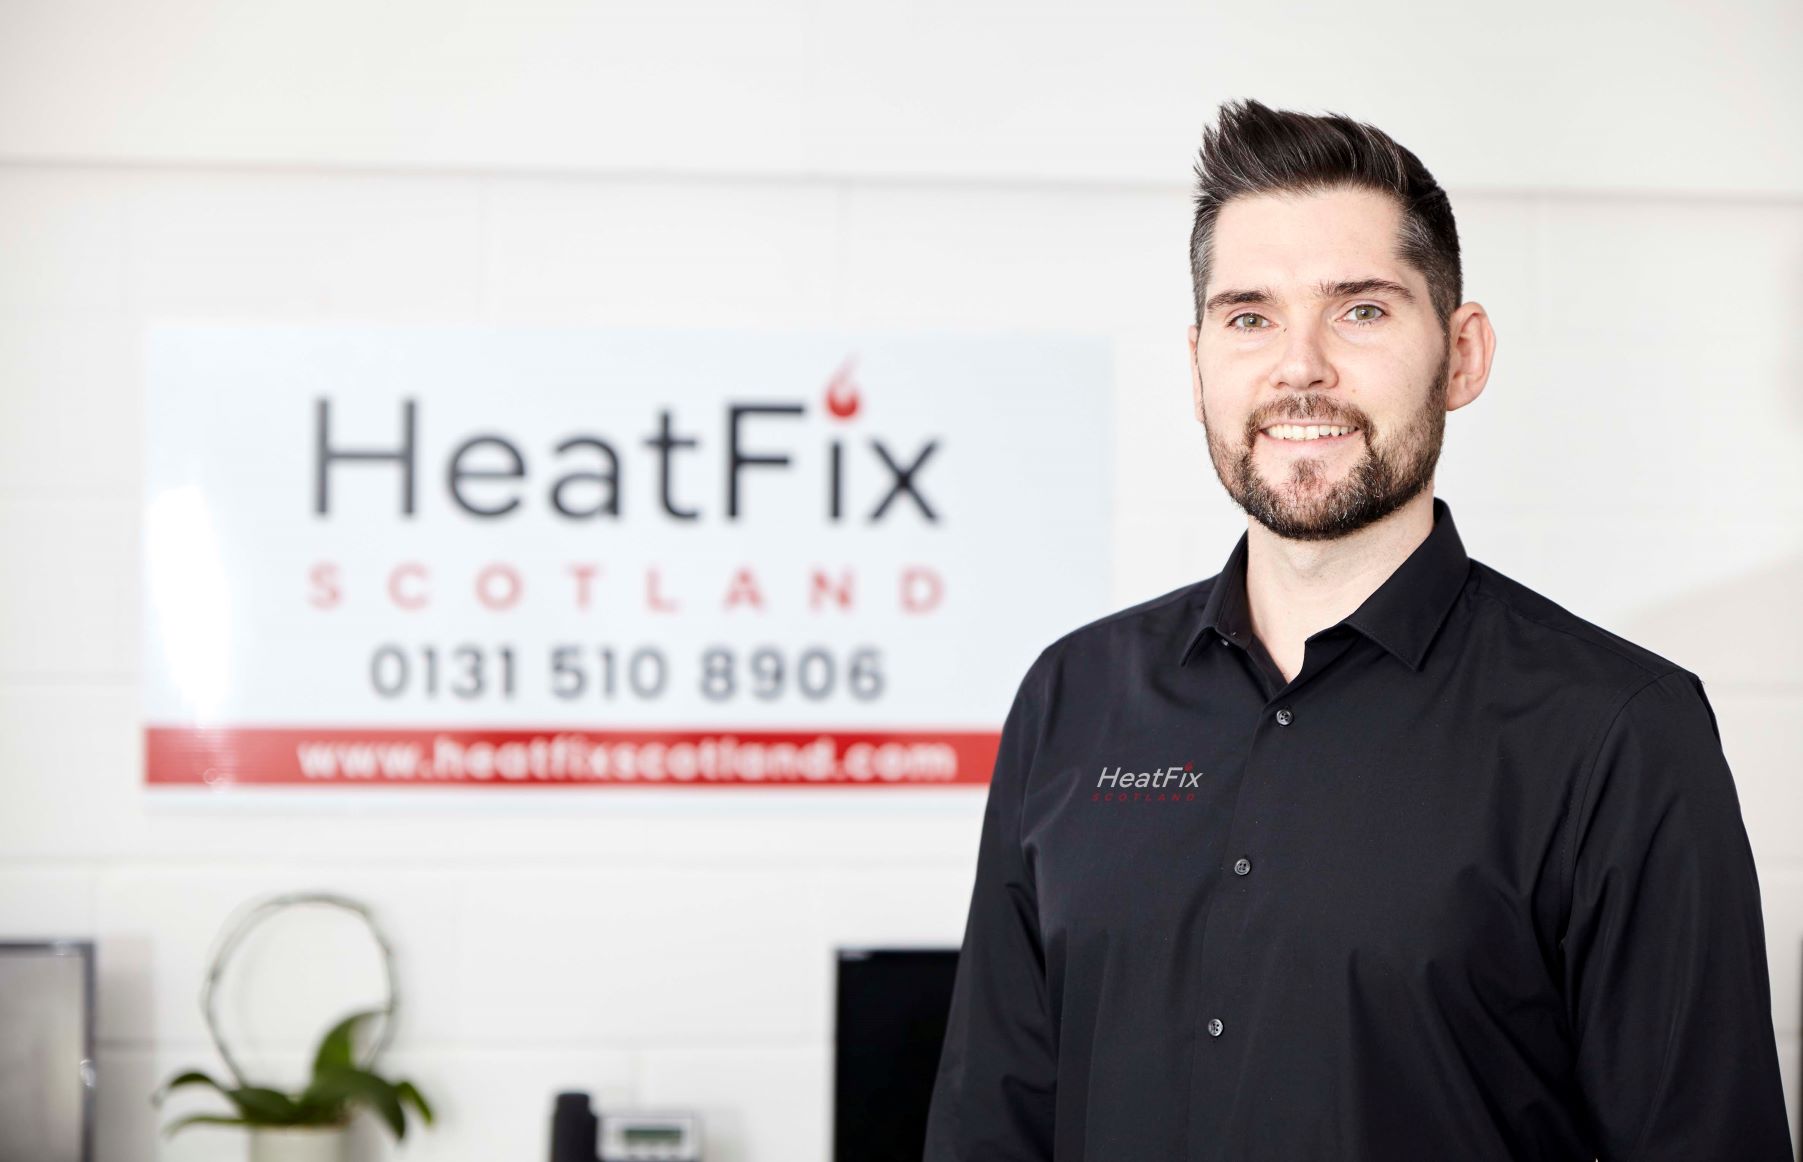 HeatFix Scotland targets rapid growth after launch